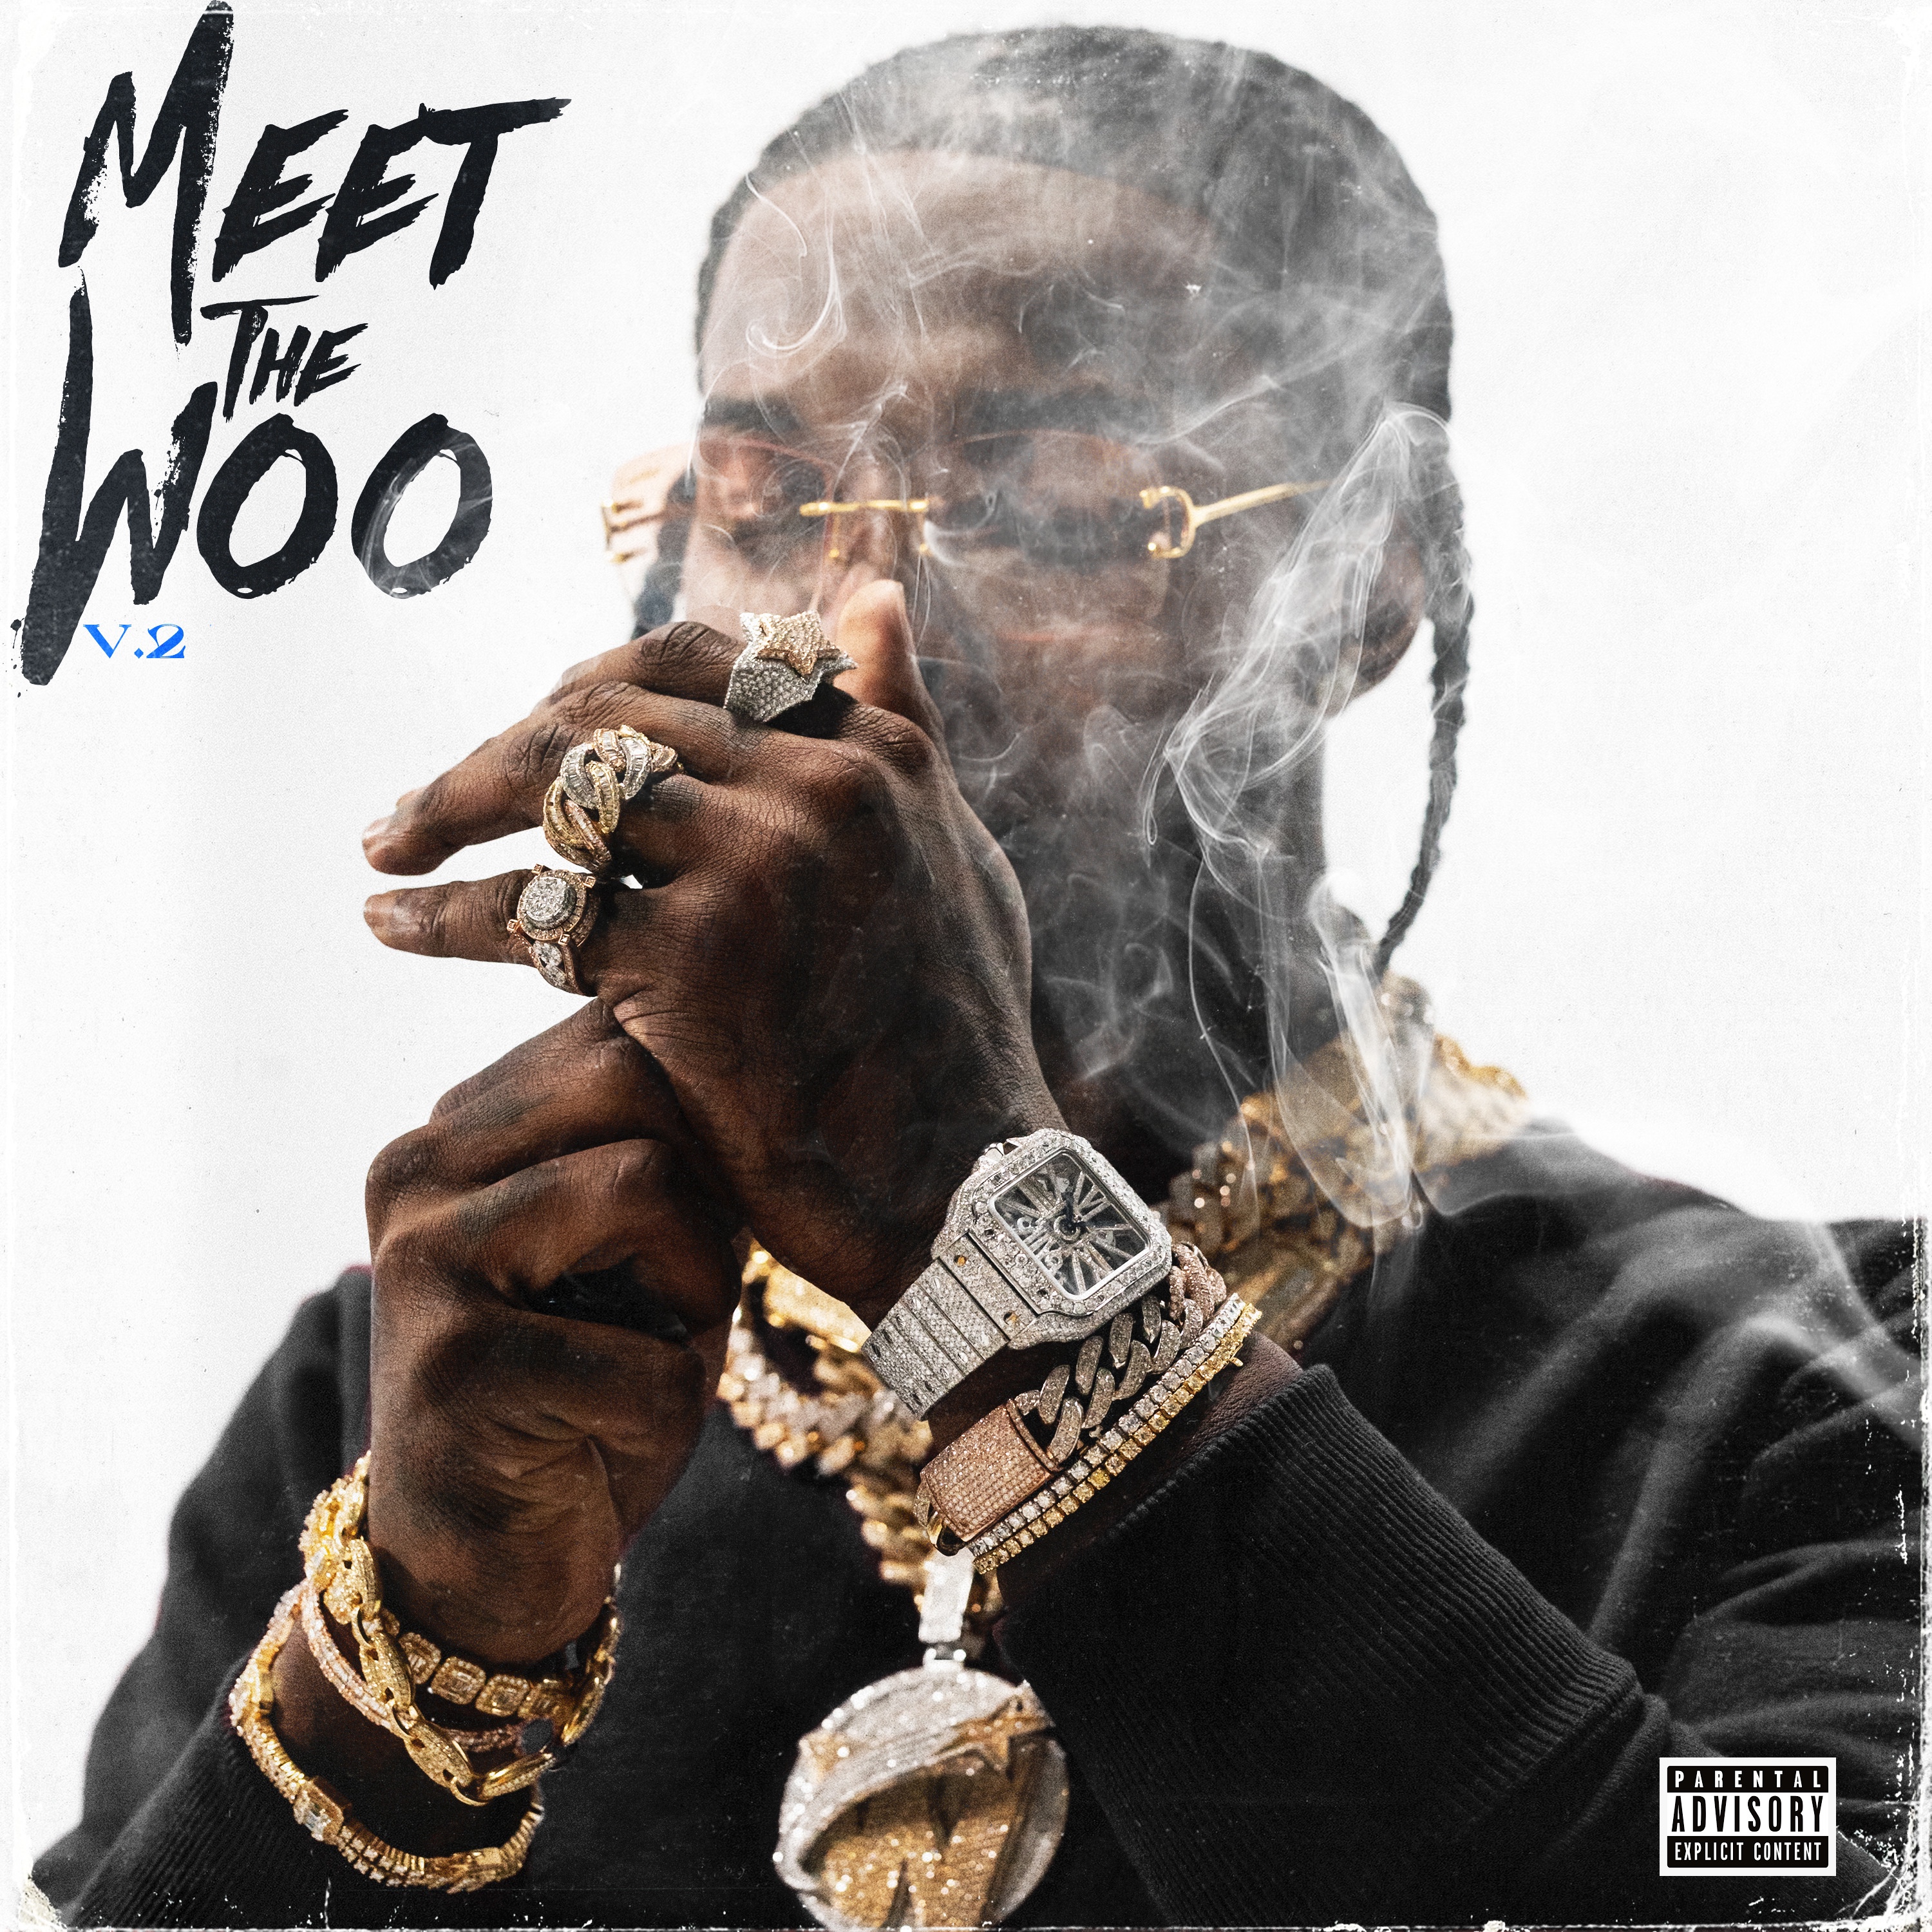 Release “Meet the Woo 2” by Pop Smoke - Cover Art - MusicBrainz